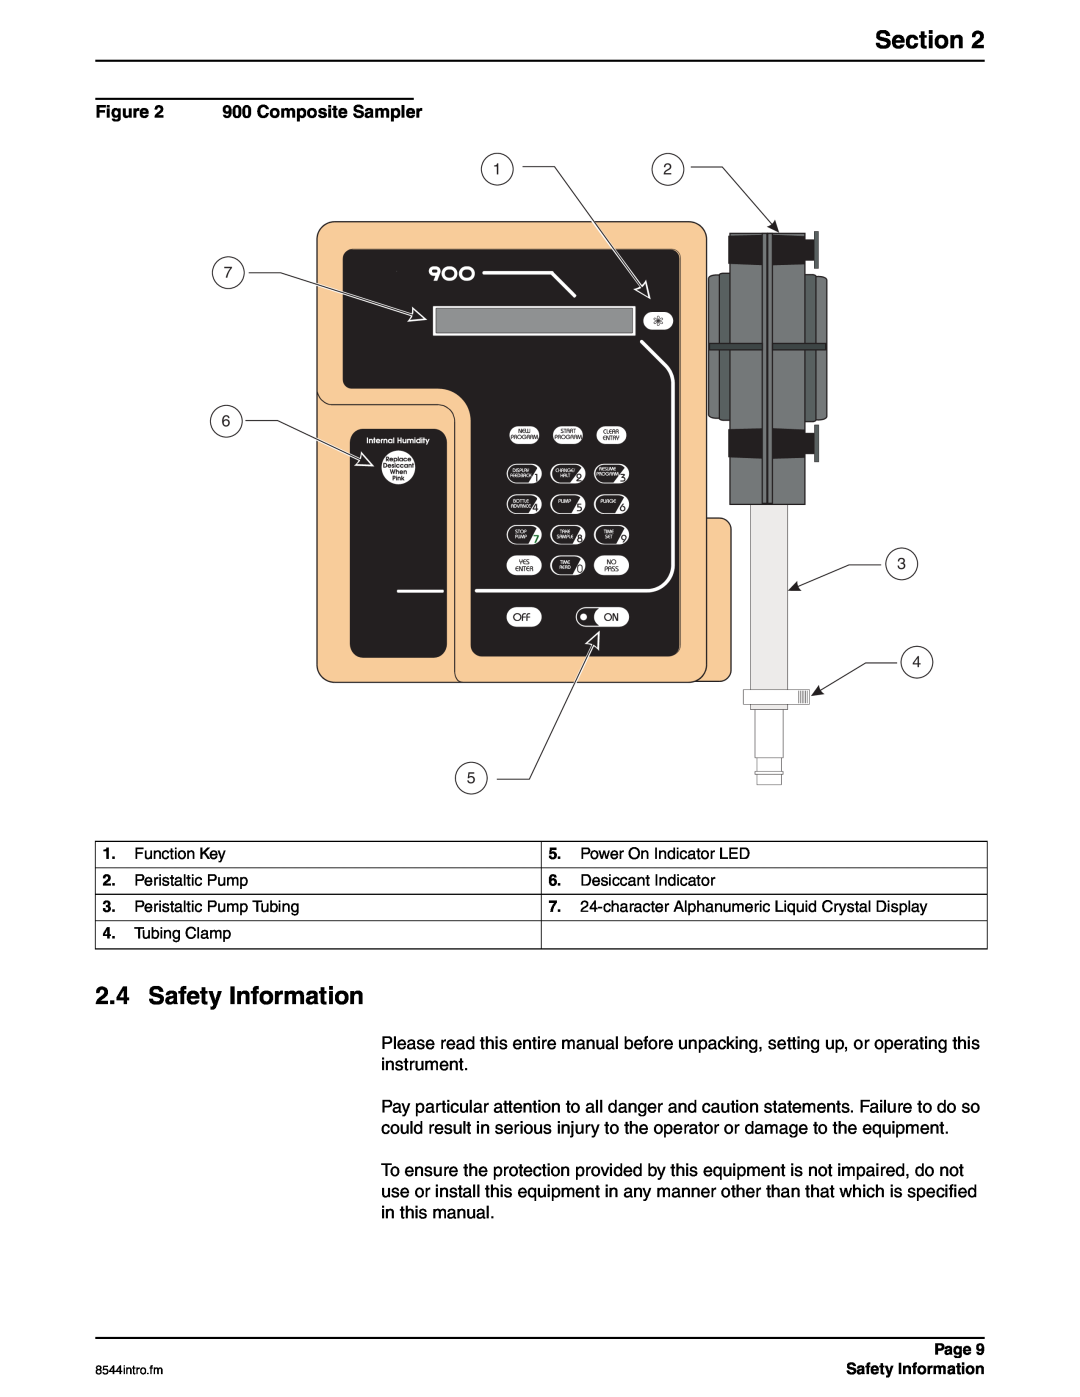 Hach manual Safety Information, Section, 900 Composite Sampler 